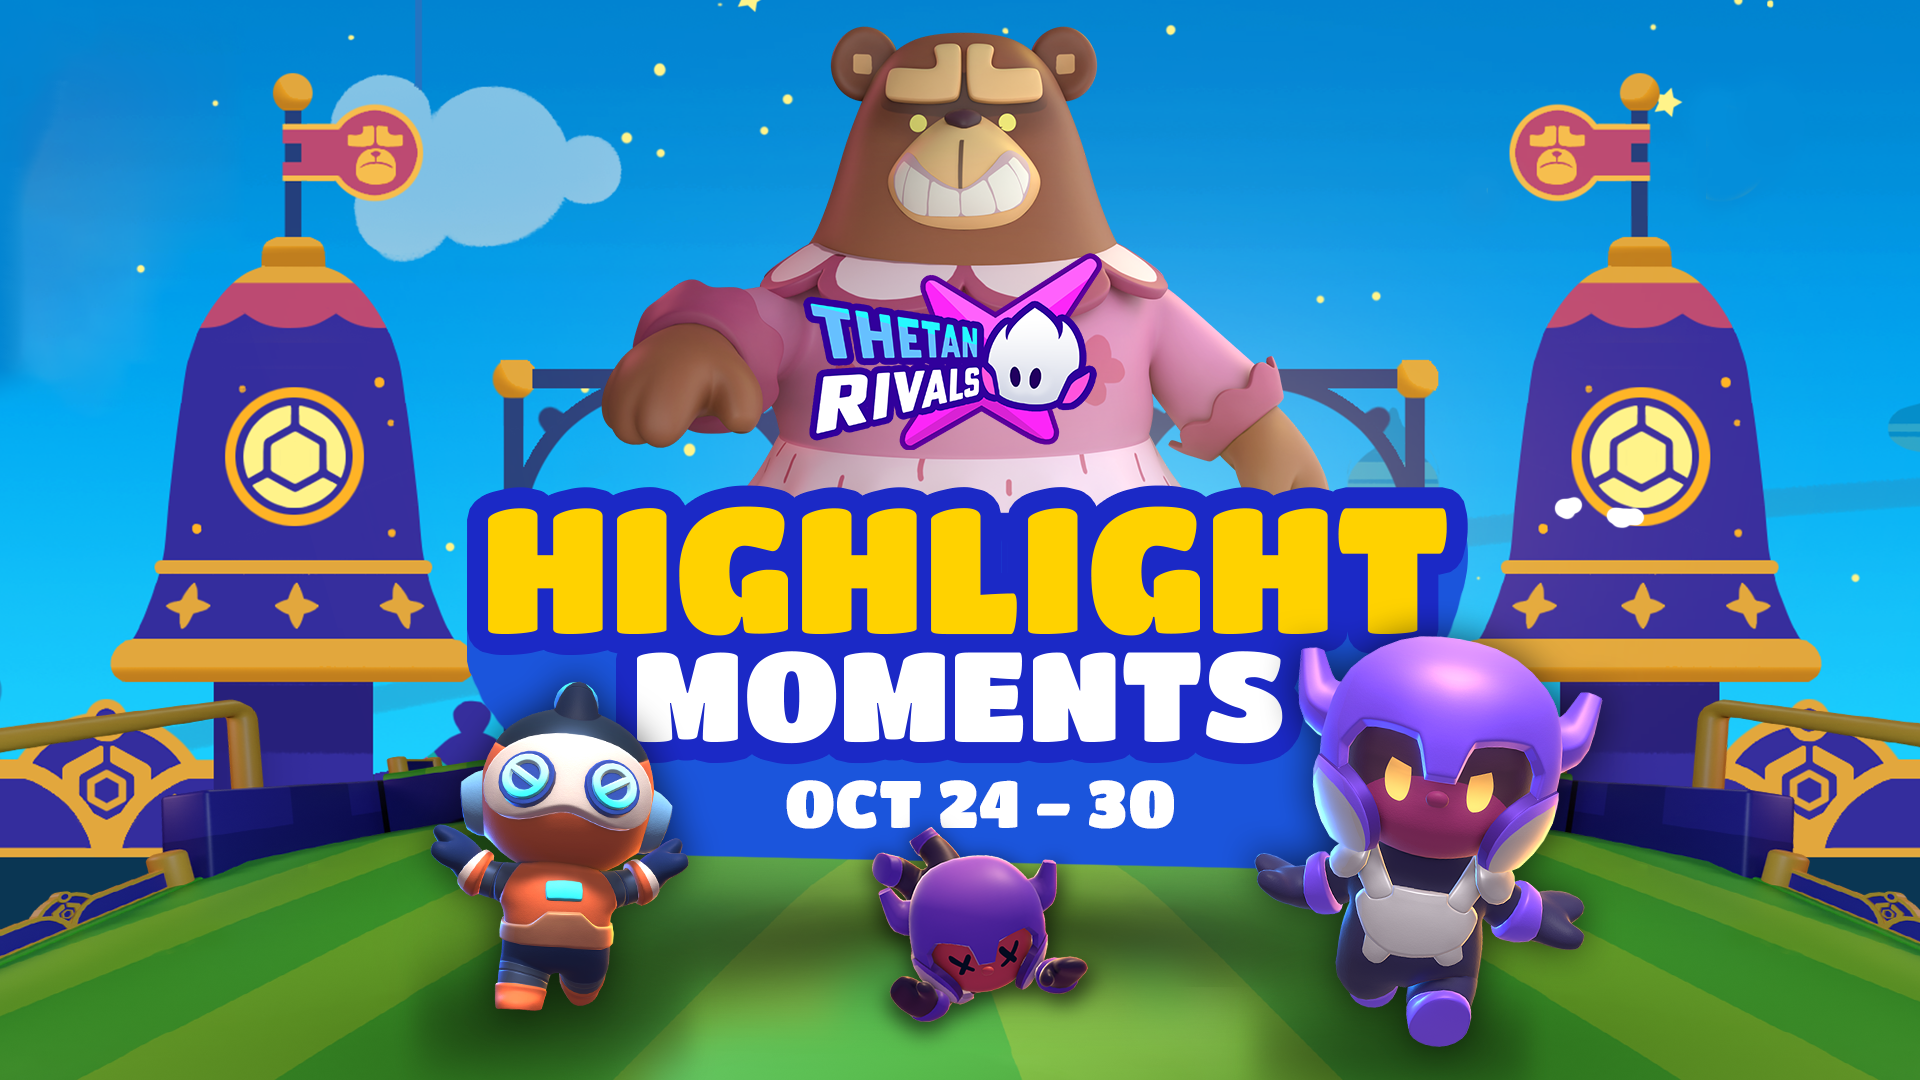 Highlight Moments (Week Oct 24 - 30)